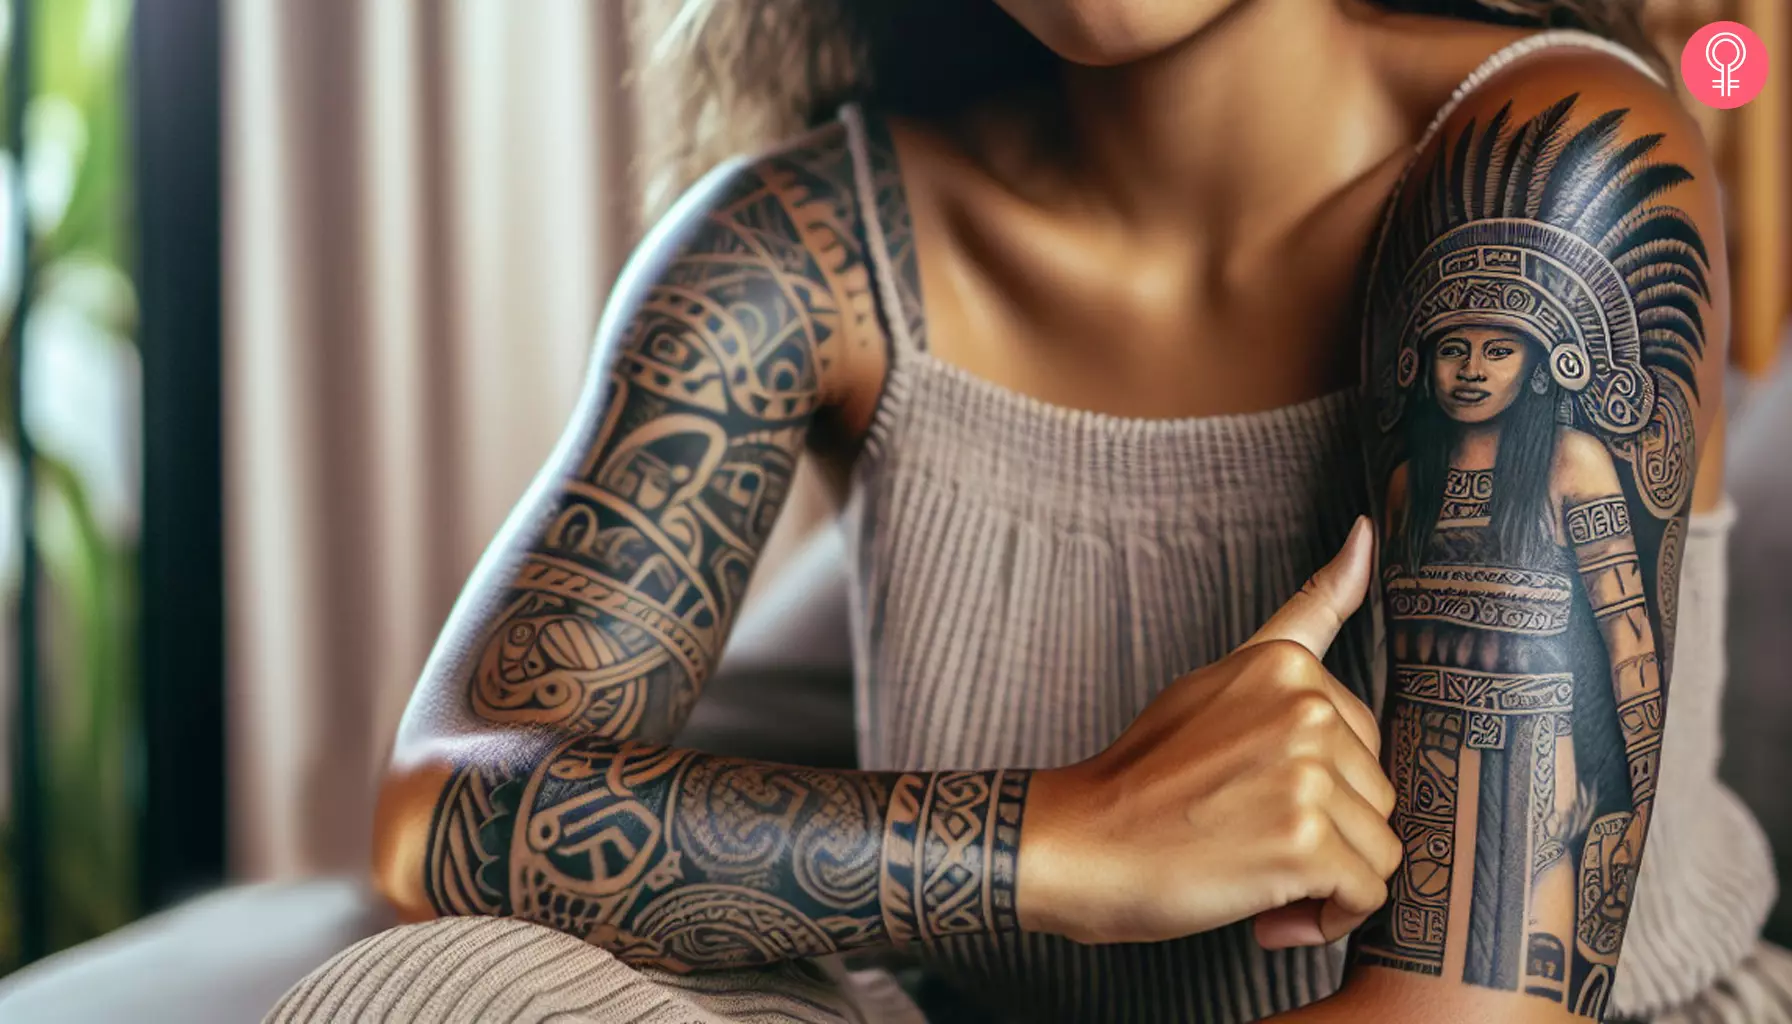 A Mayan female warrior tattoo on a woman’s arm